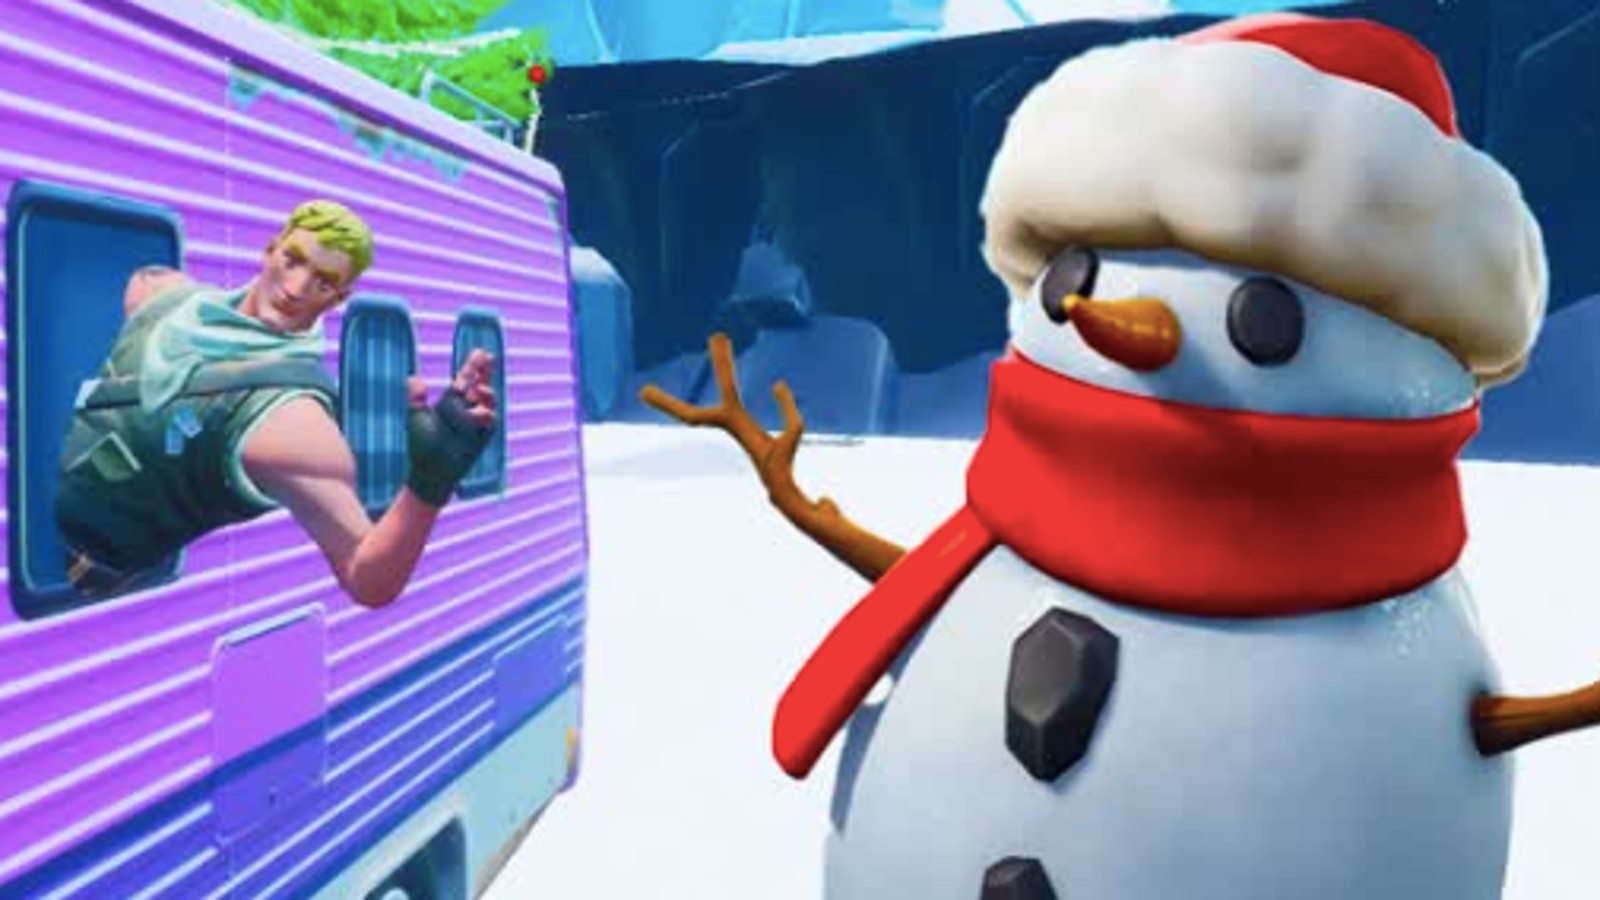 Snowman i Fortnite postać na śniegu